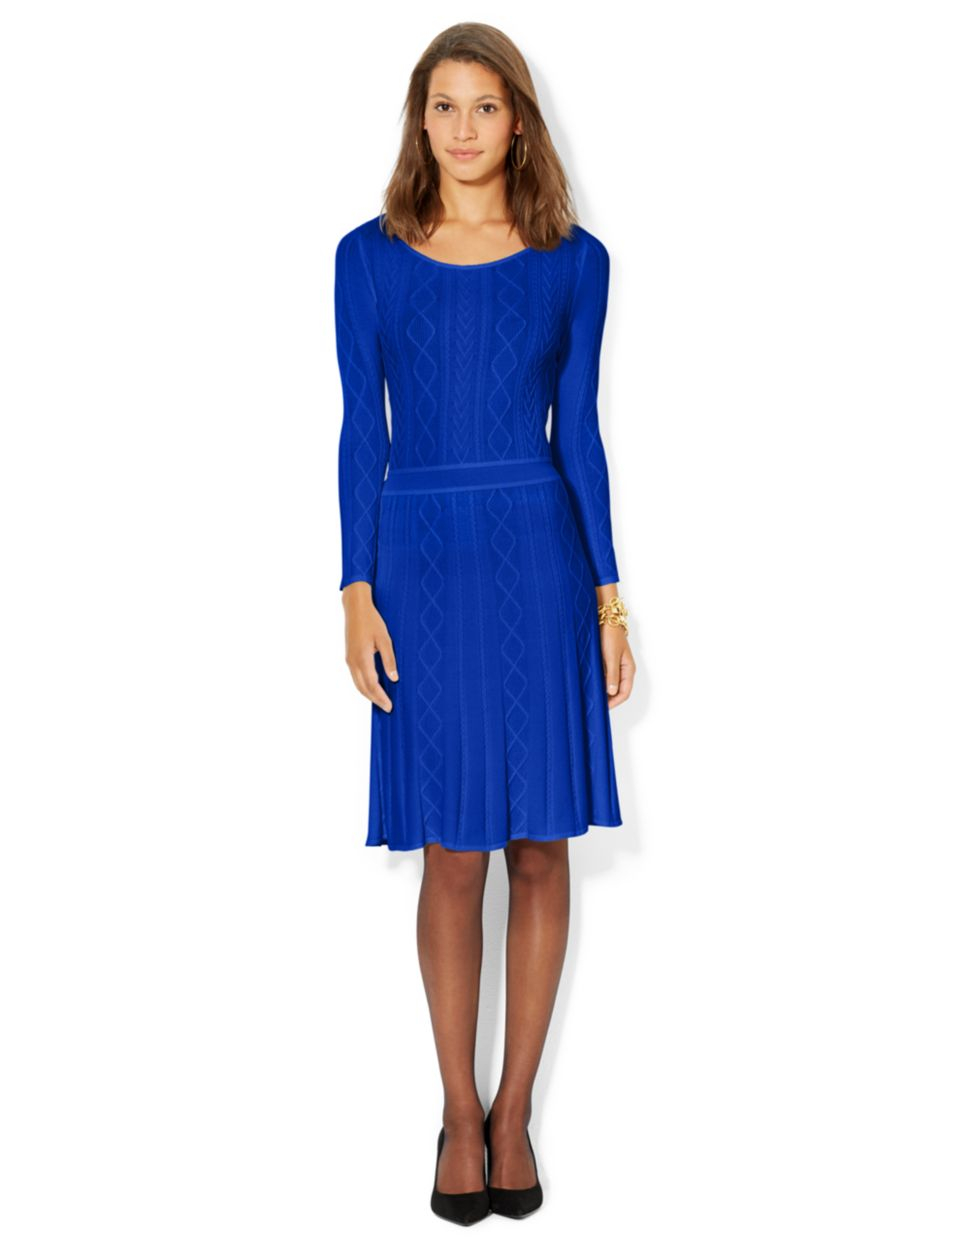 Lyst - Lauren By Ralph Lauren Cable Knit Sweater Dress in Blue